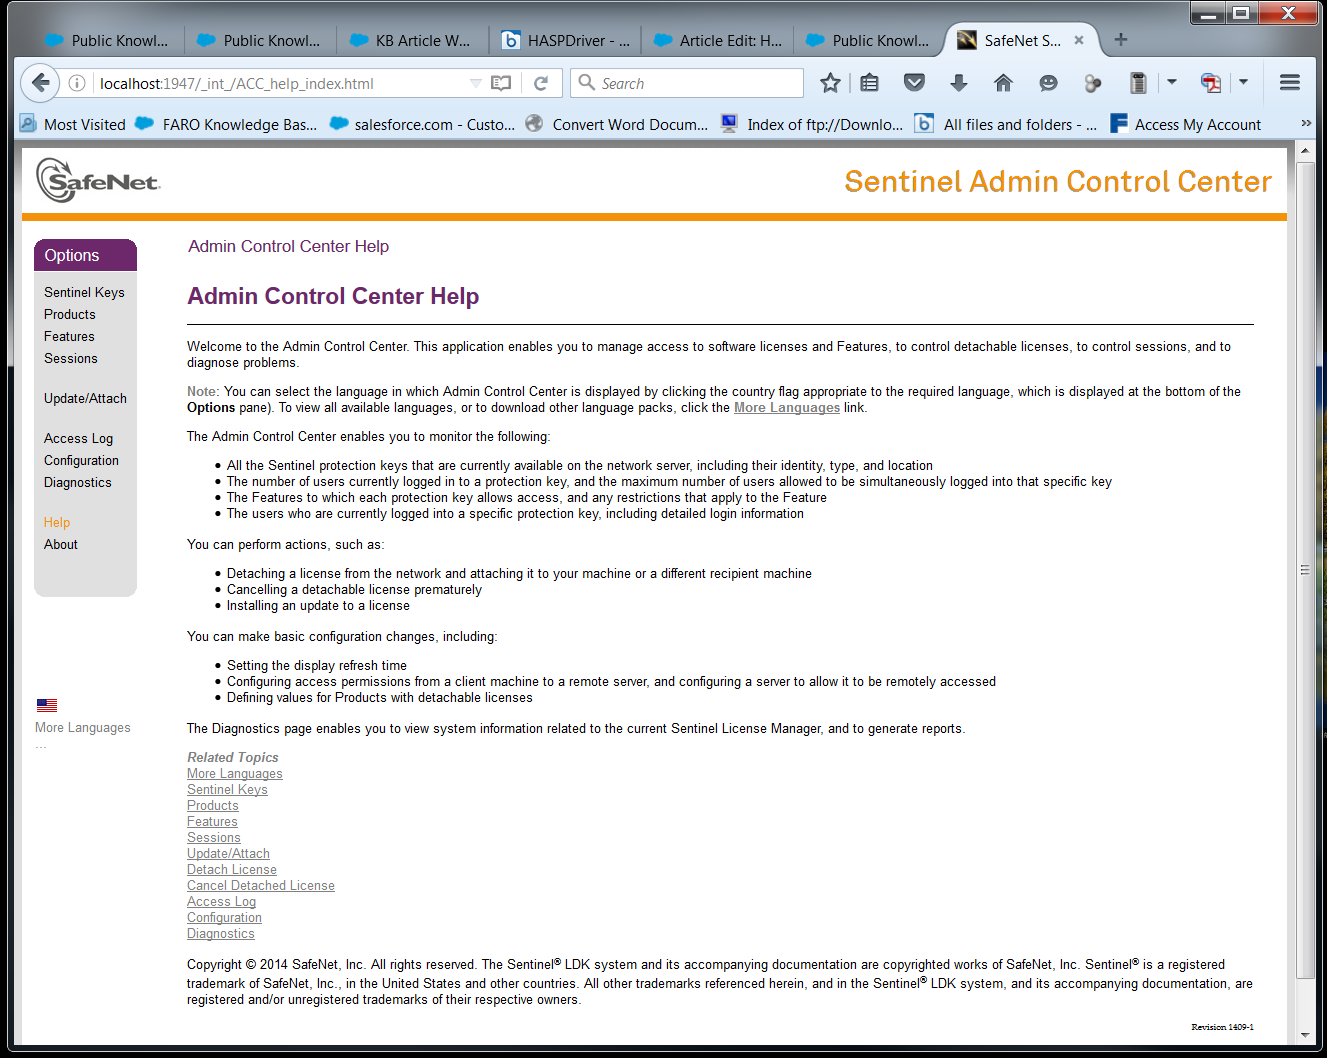 SafeNet Sentinel Admin Control Center